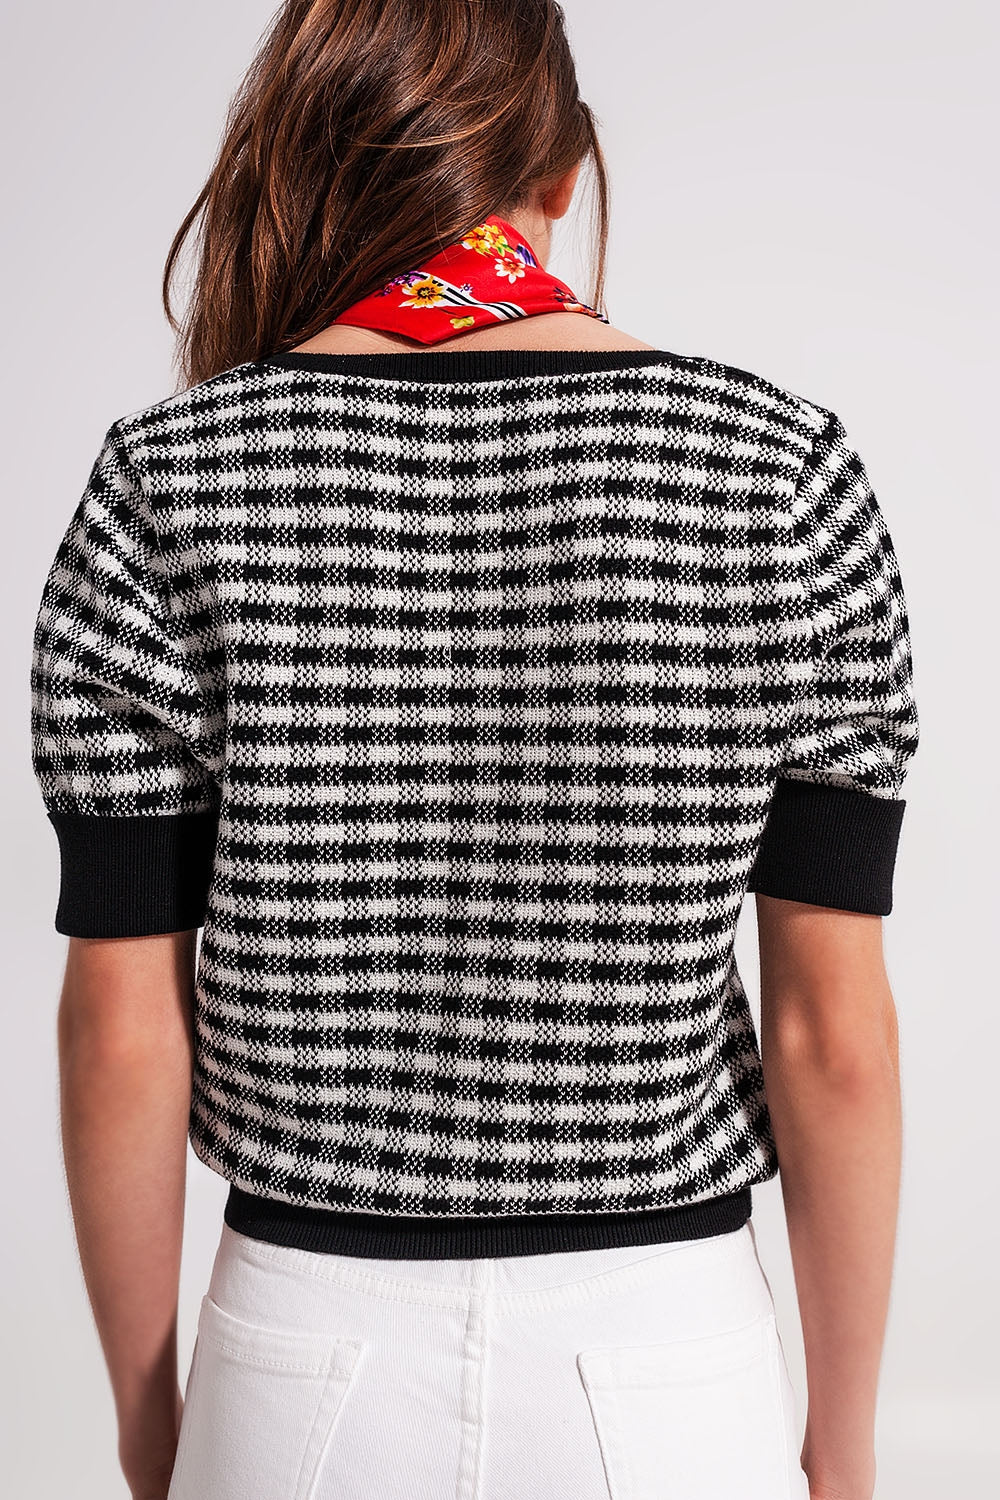 Square Neck Jumper Sweater in Black and White Check | Q2